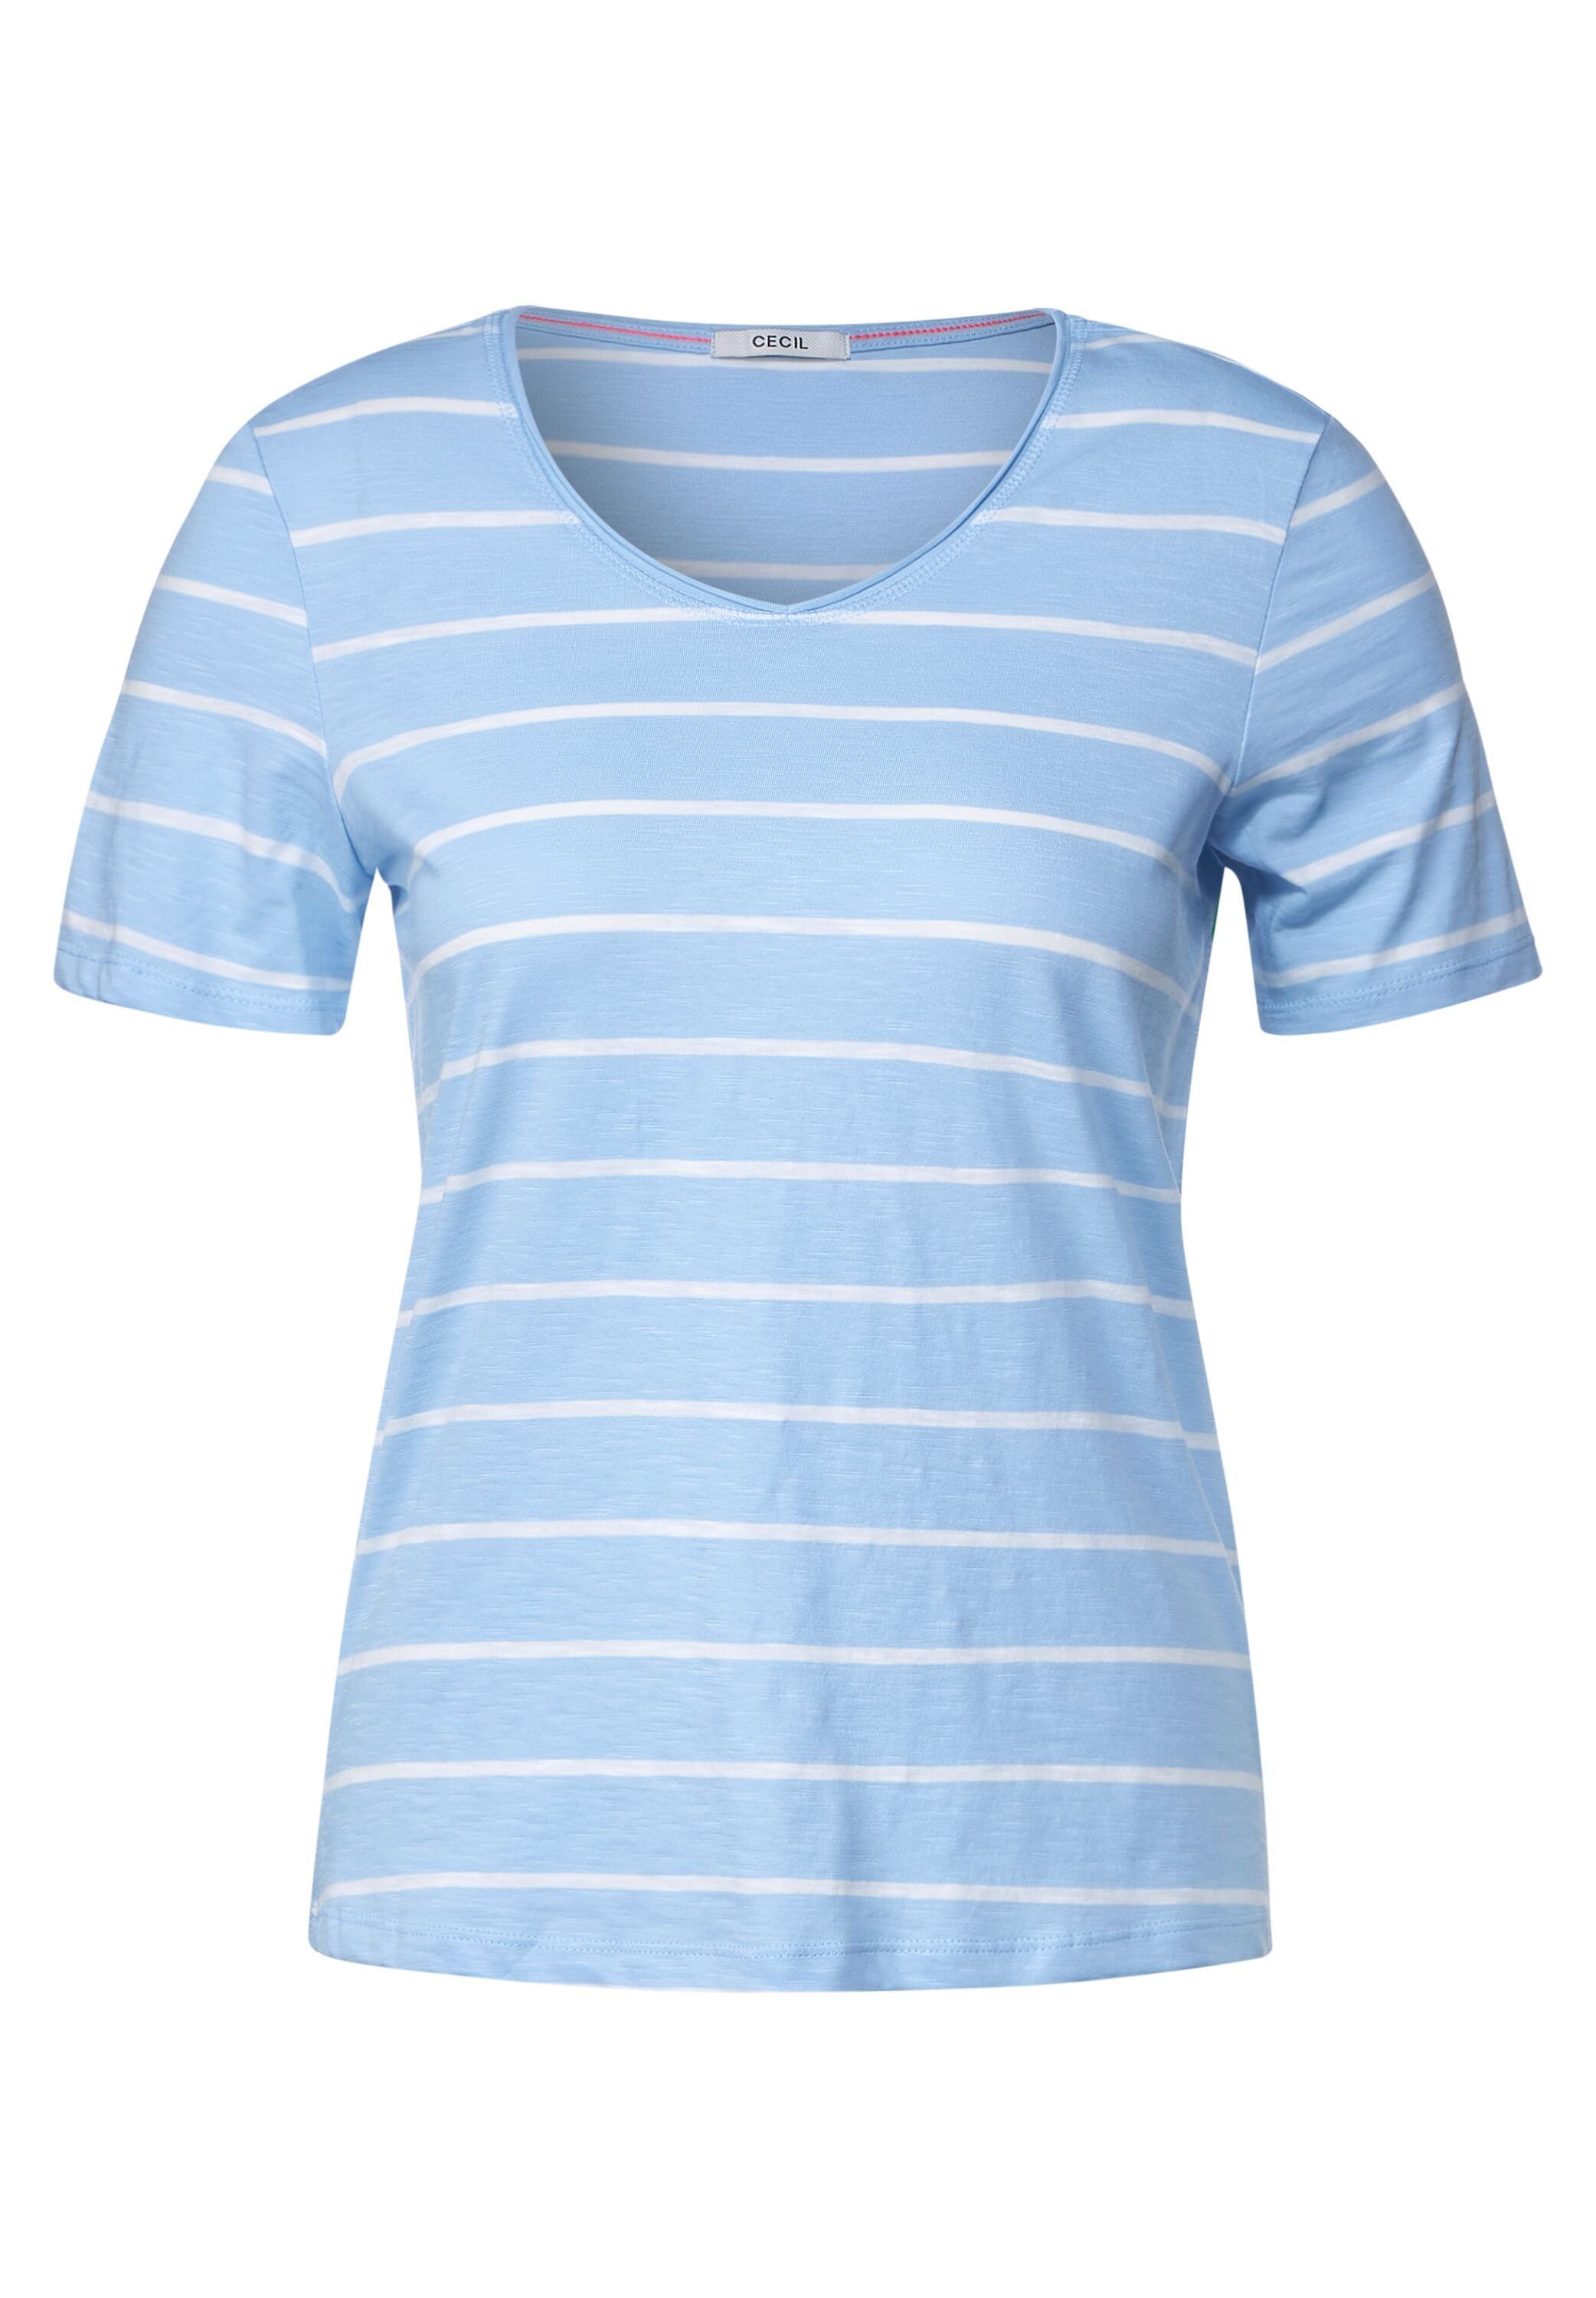 tranquil Cecil blue T-Shirt